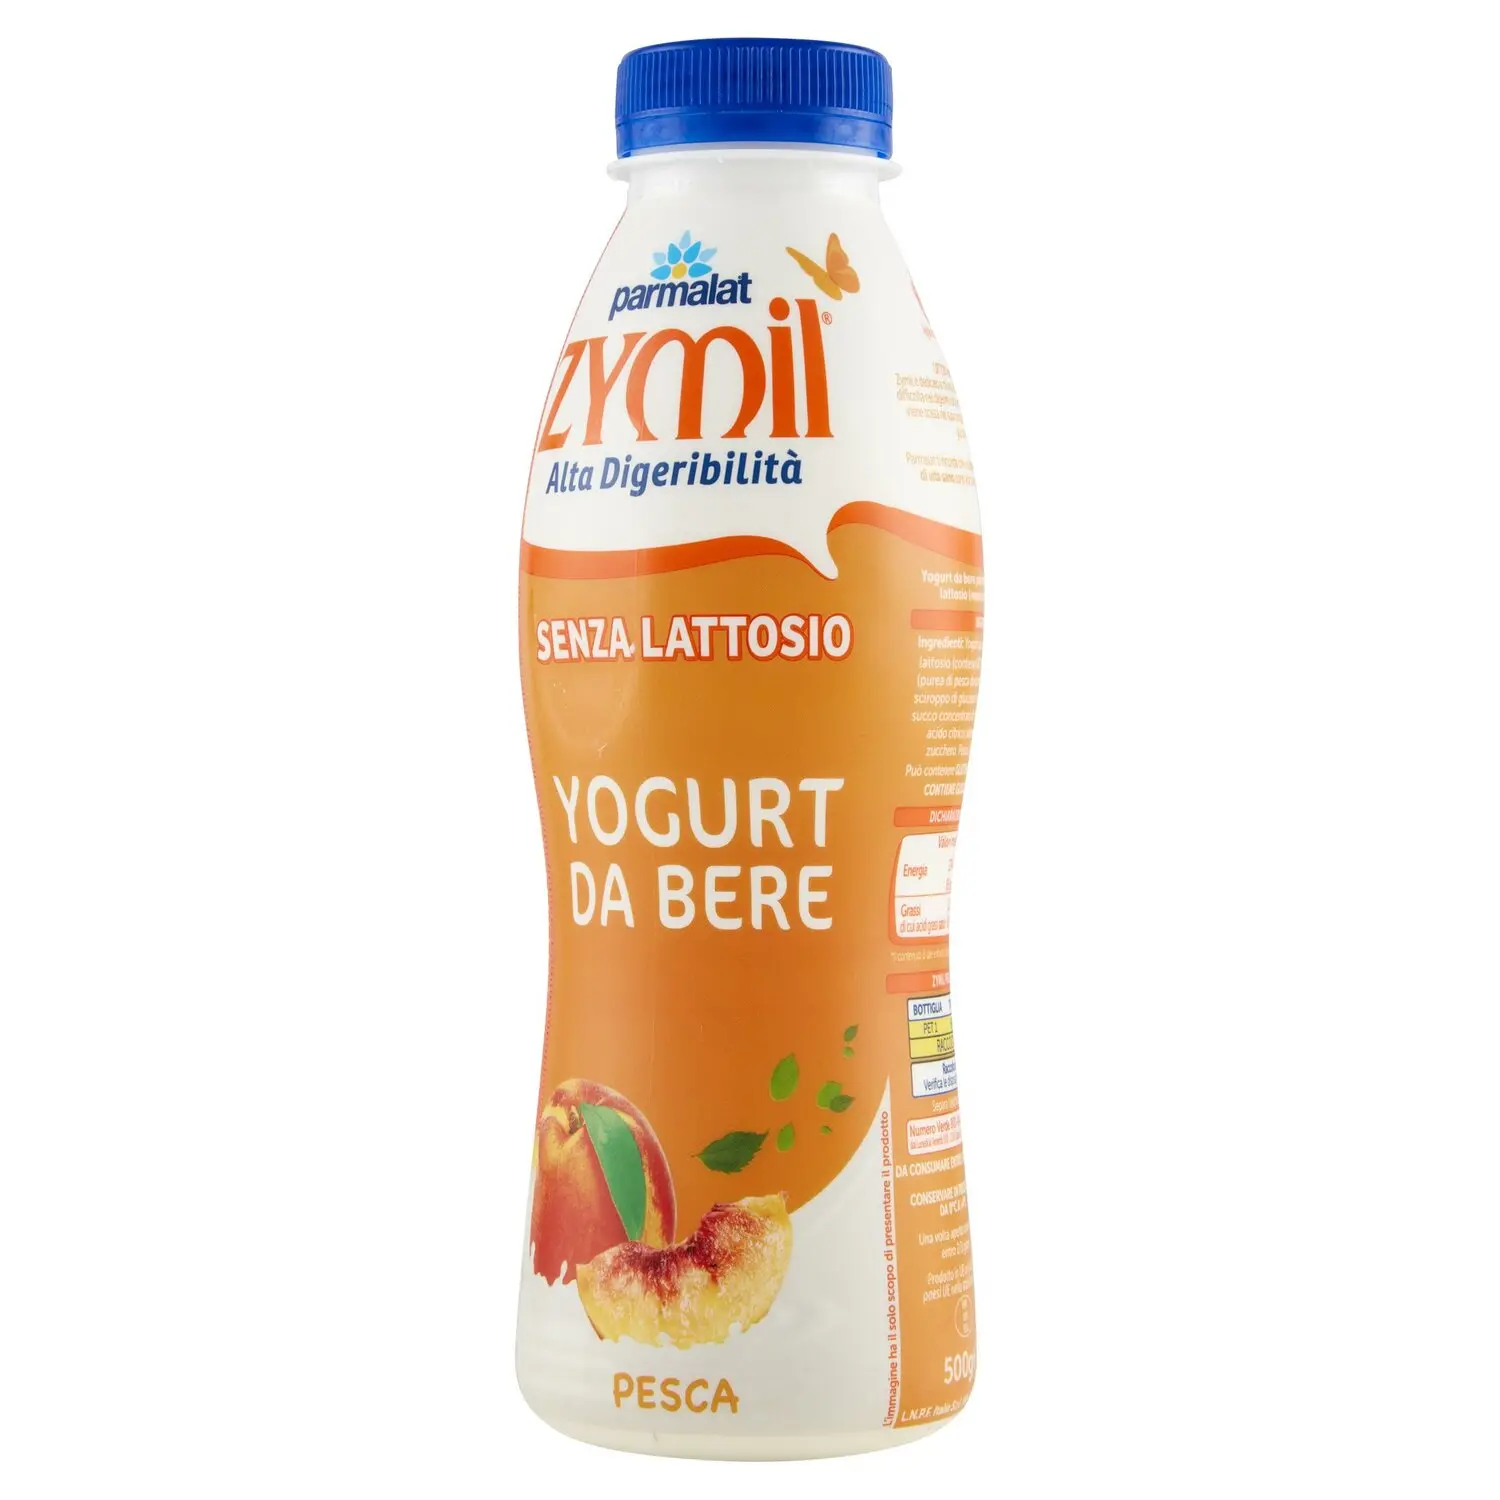 Yogurt Vaniglia Senza Lattosio: Fresco e Gustoso - Zymil